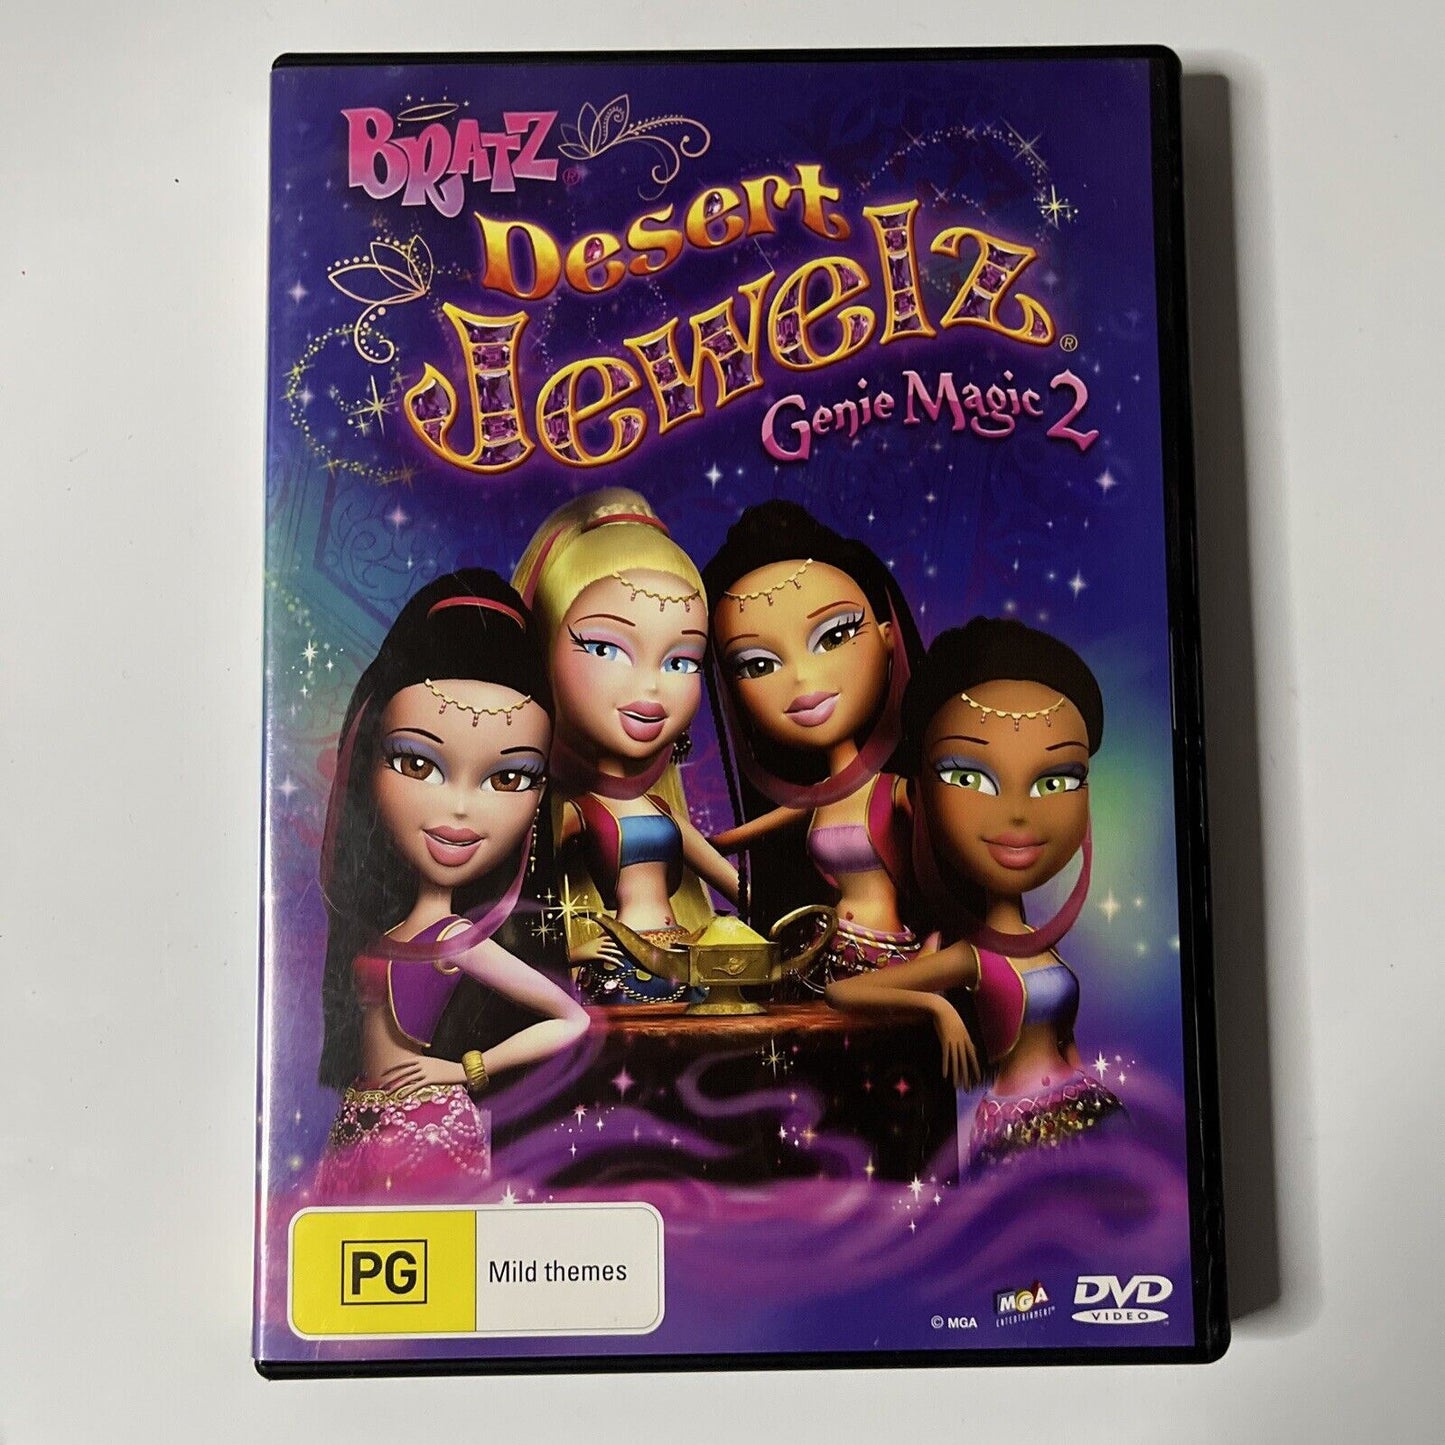 Bratz - Desert Jewelz - Genie Magic 2 (DVD, 2009) Region 4